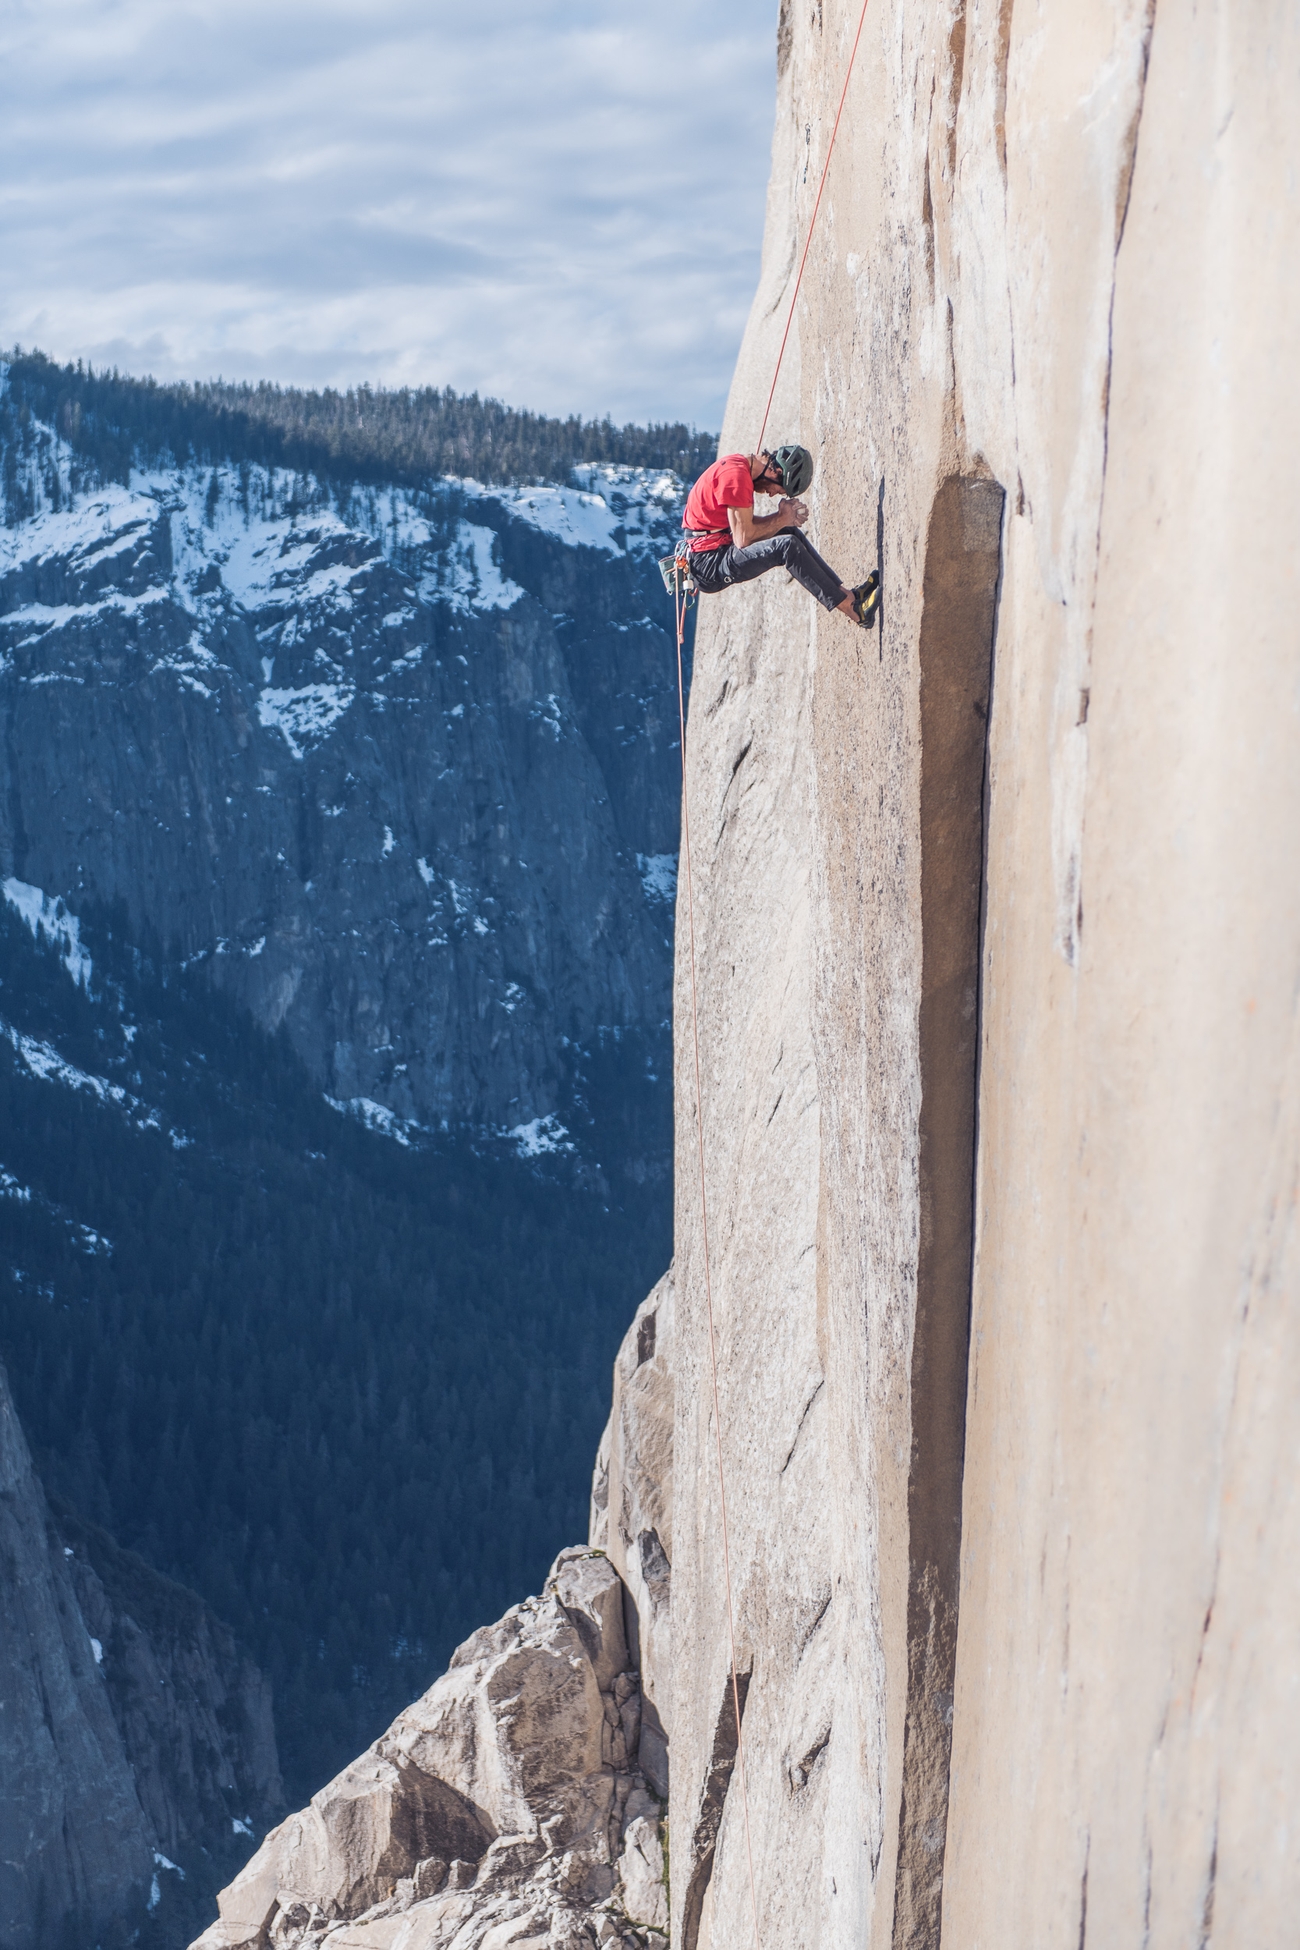 Siebe Vanhee, Dawn Wall, El Capitan, Yosemite